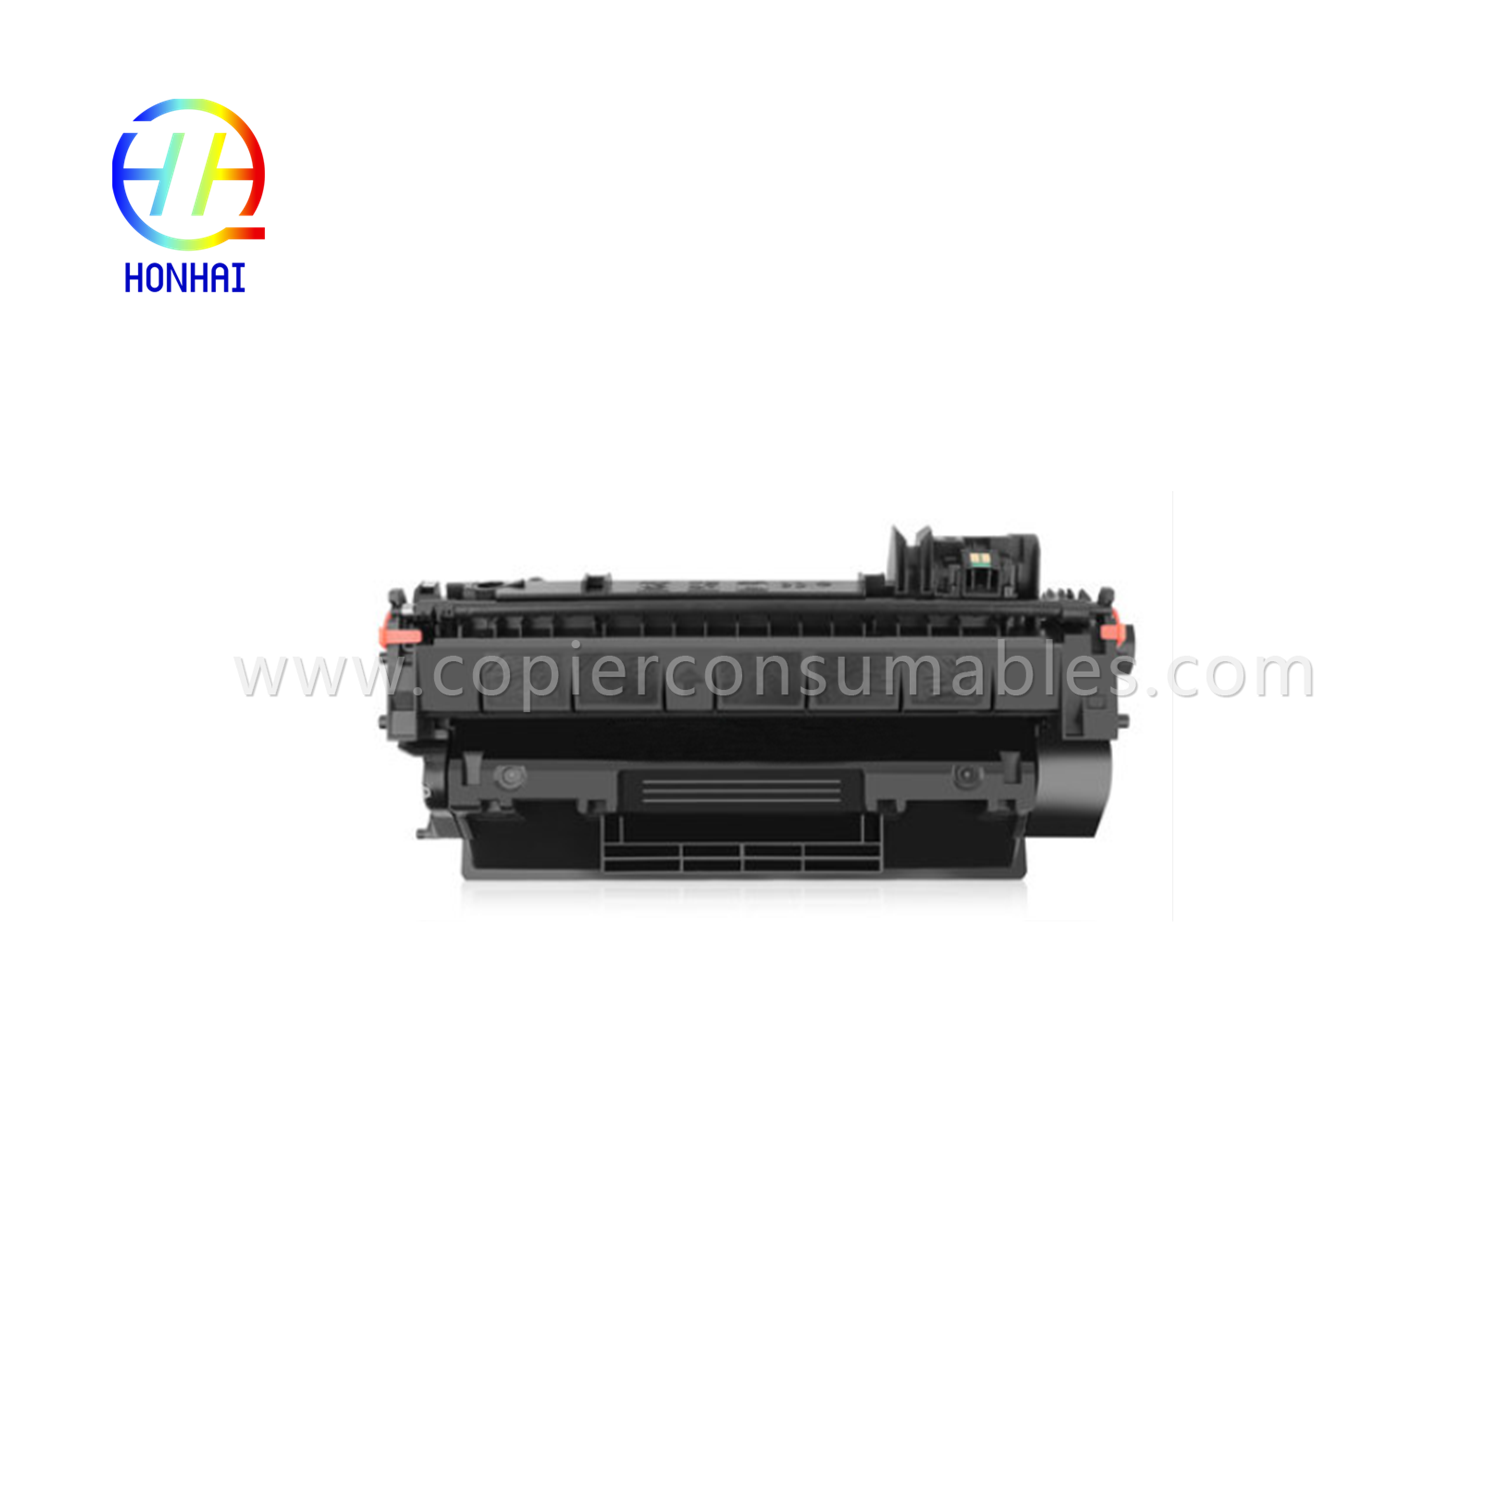 https://www.copierhonhaitech.com/toner-cartridge-for-hp-p2035-hp05a-product/